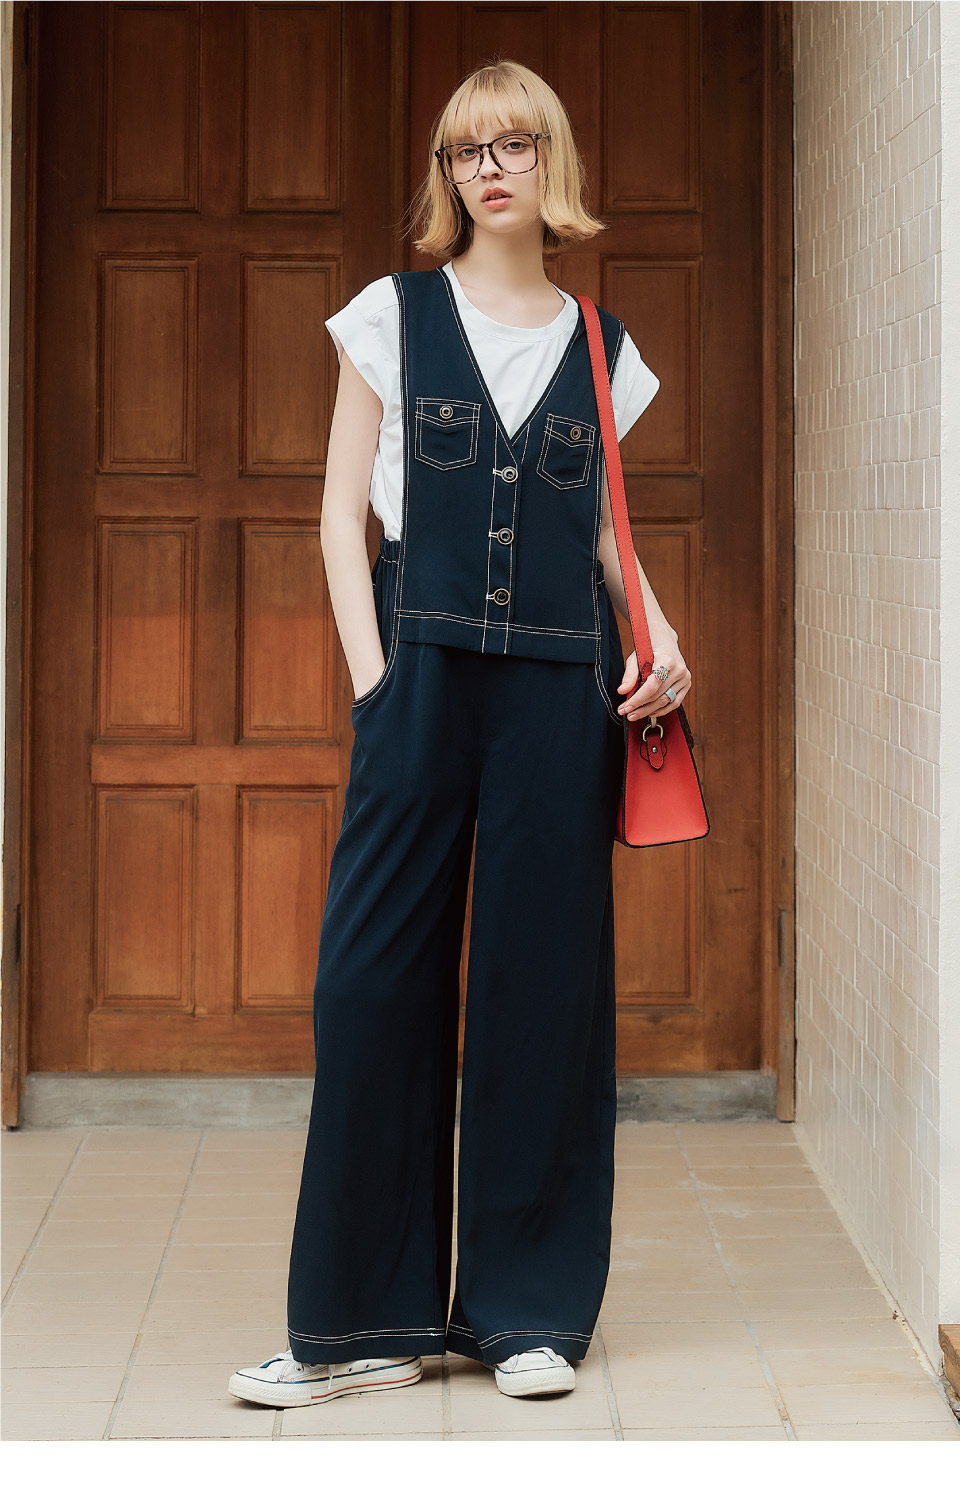 OUWEY 歐薇 時尚車線造型寬直筒吊帶褲(深藍色；XS-M